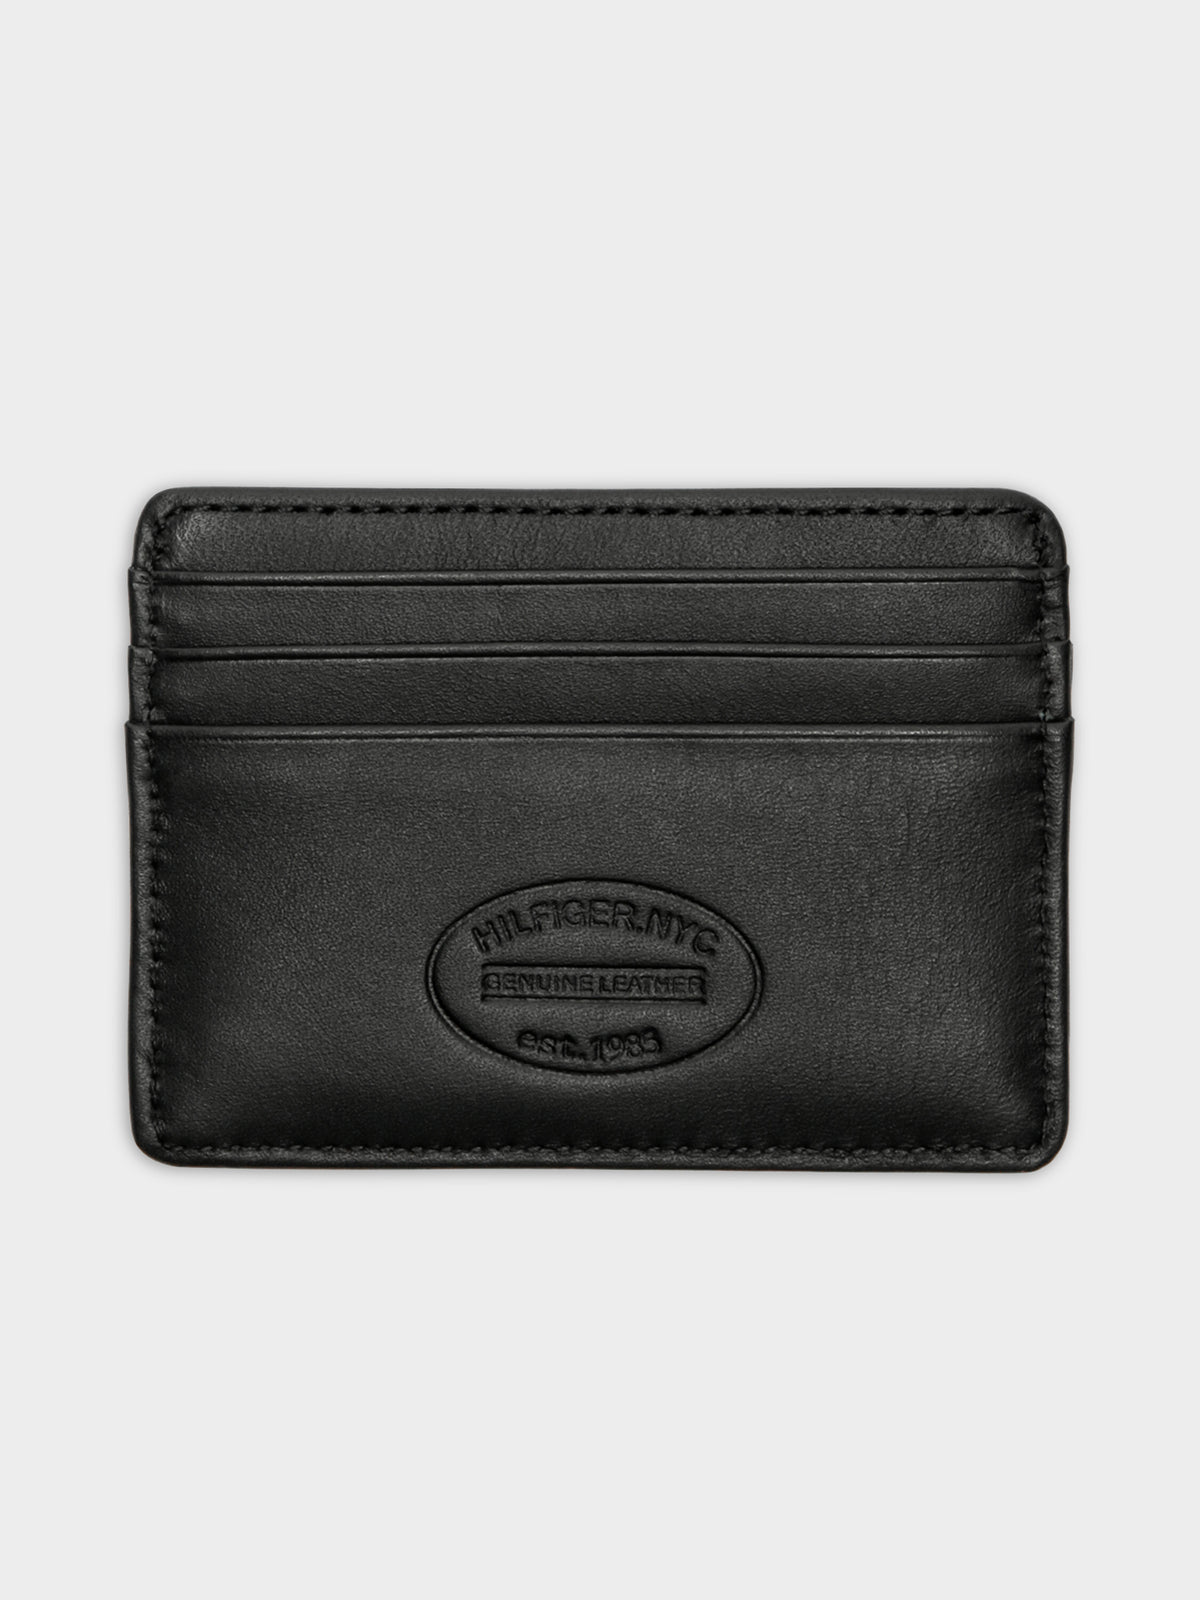 6 Card Holder Wallet in Black Leather